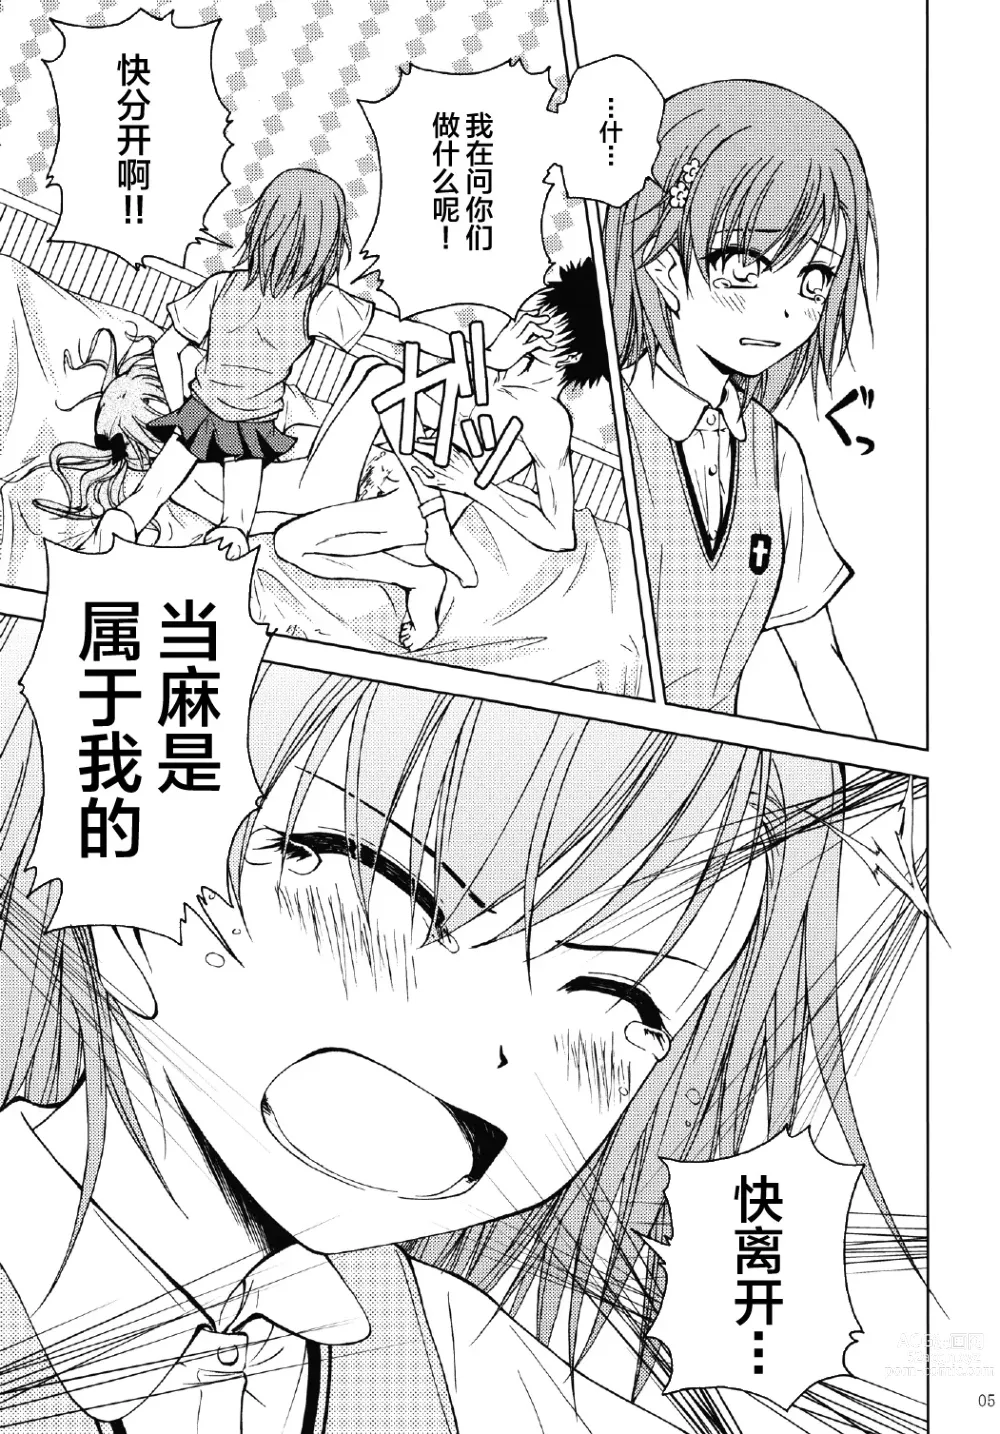 Page 5 of doujinshi Onee-sama o Ruijinen to Sememakuri desu no!!